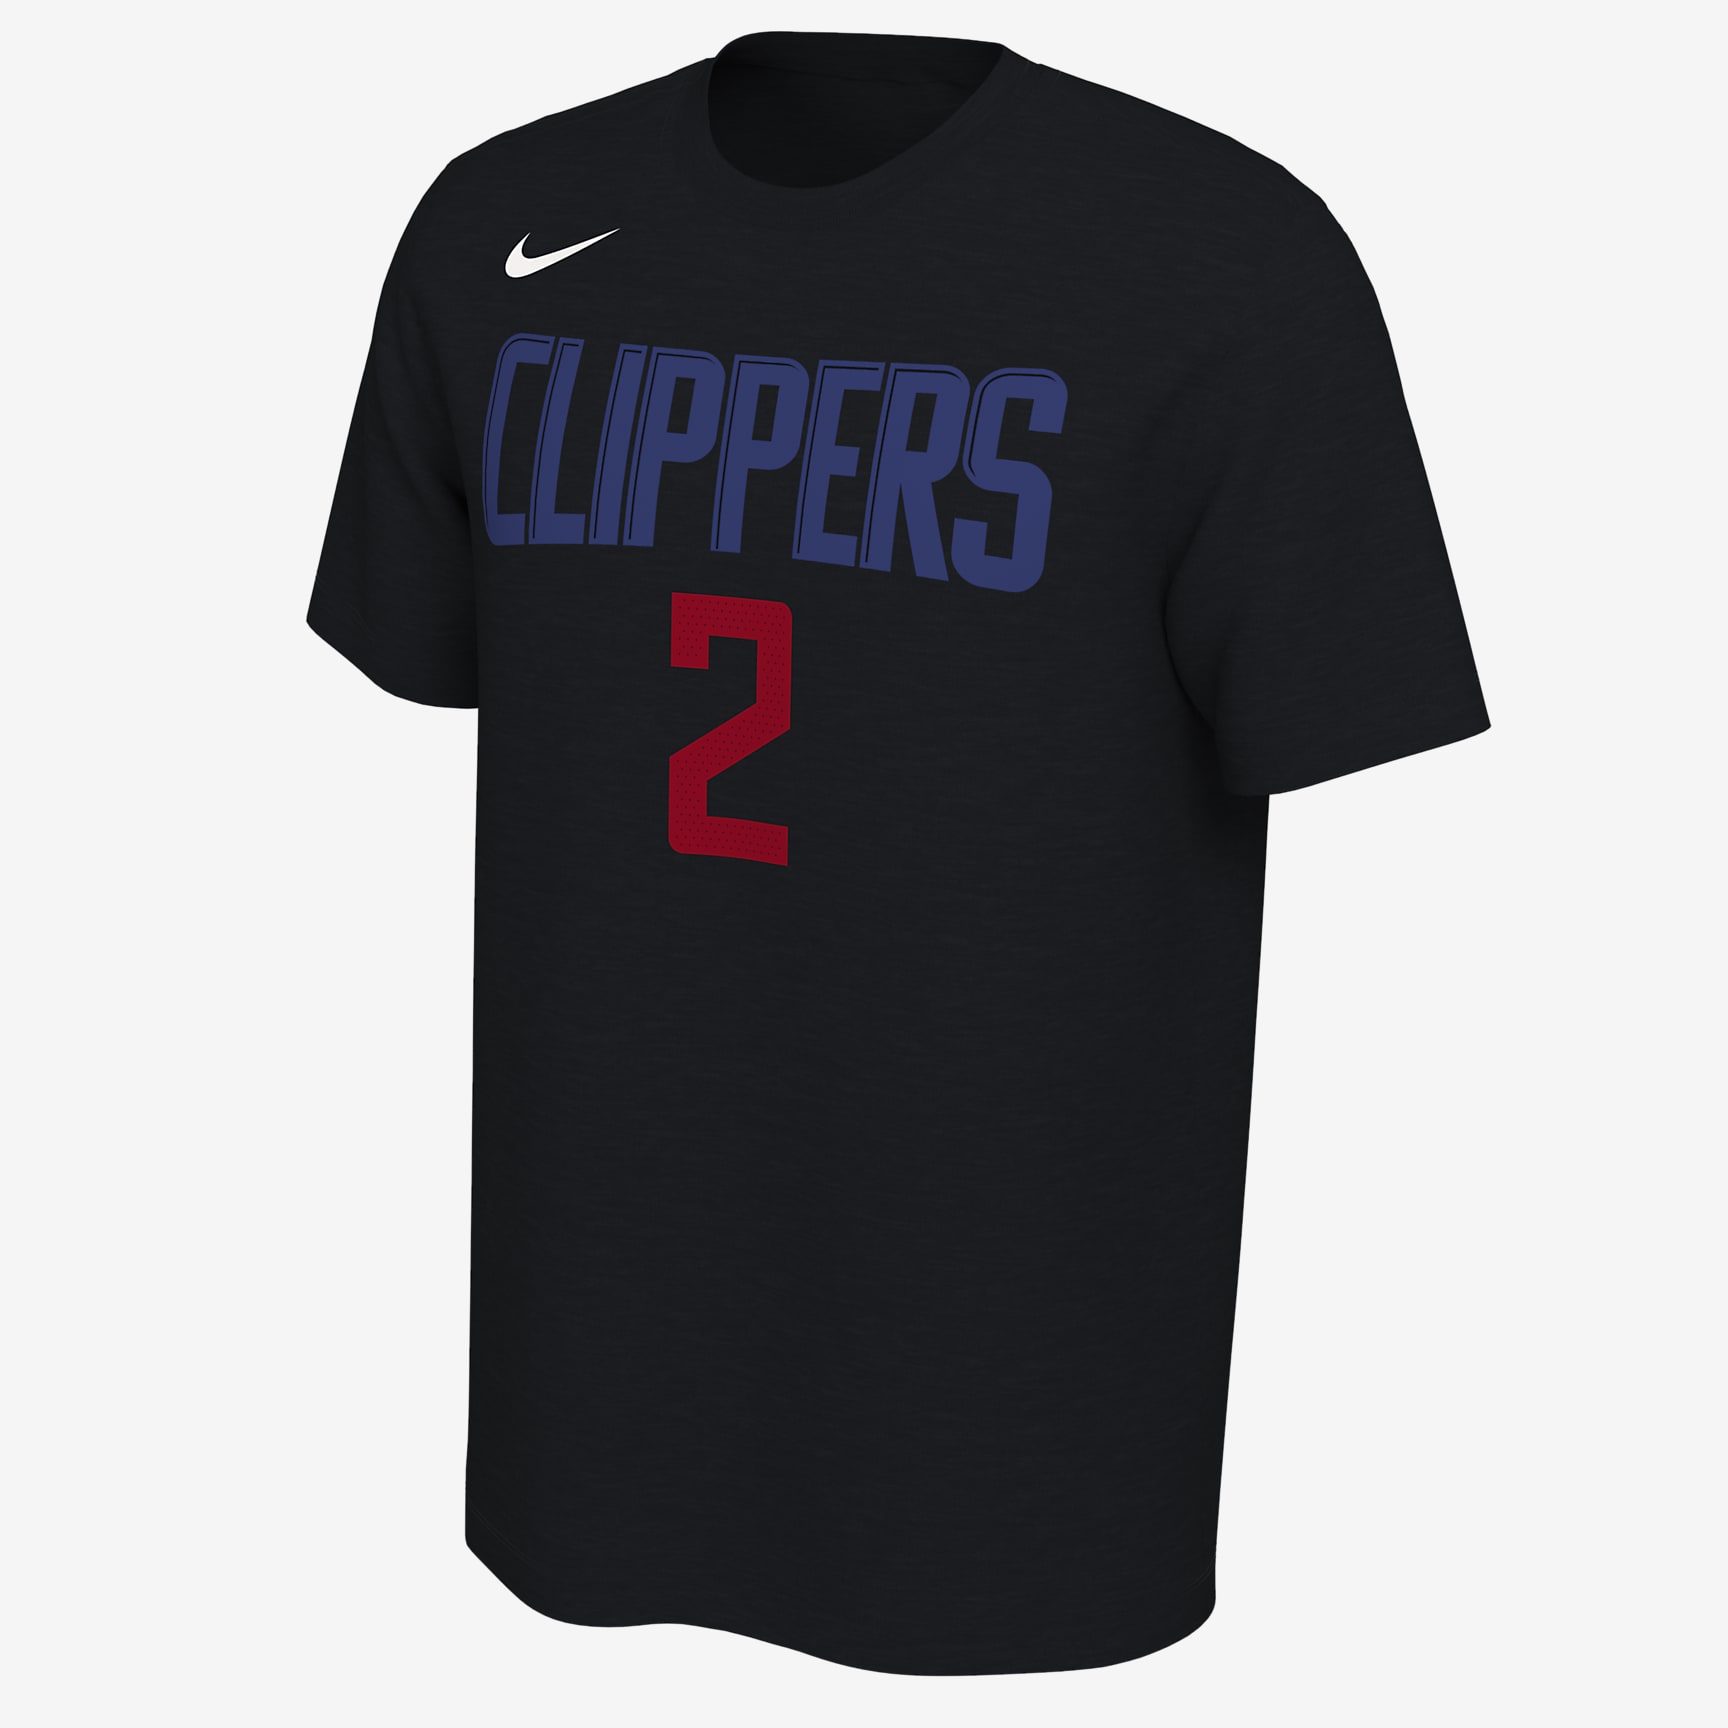 Playera para hombre Nike NBA Kawhi Leonard Clippers Icon Edition. Nike.com